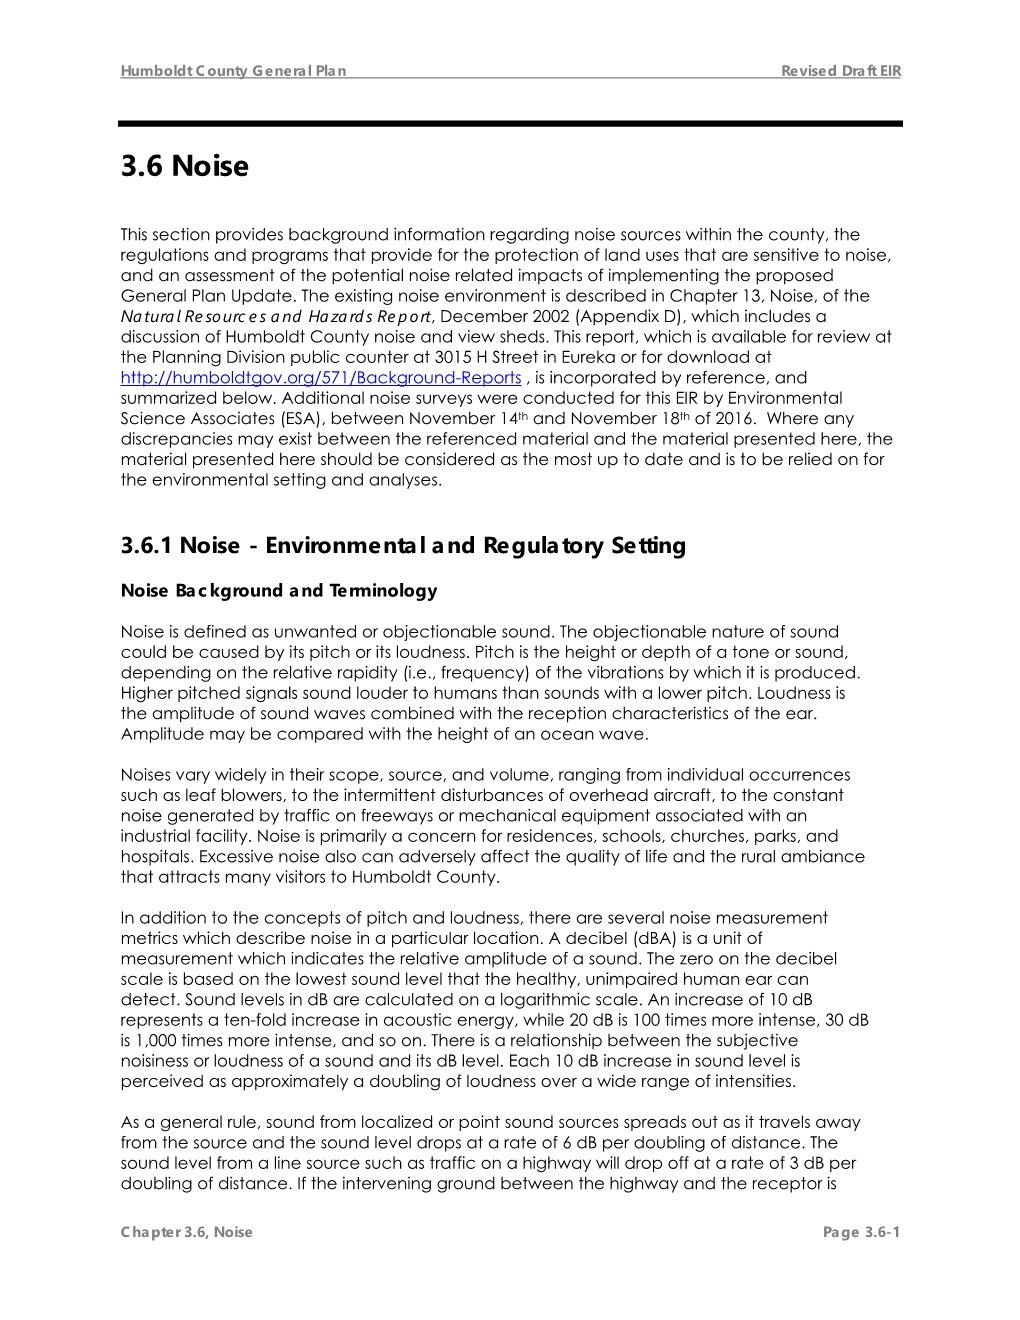 Section 3.6 Noise Revised DEIR (PDF)